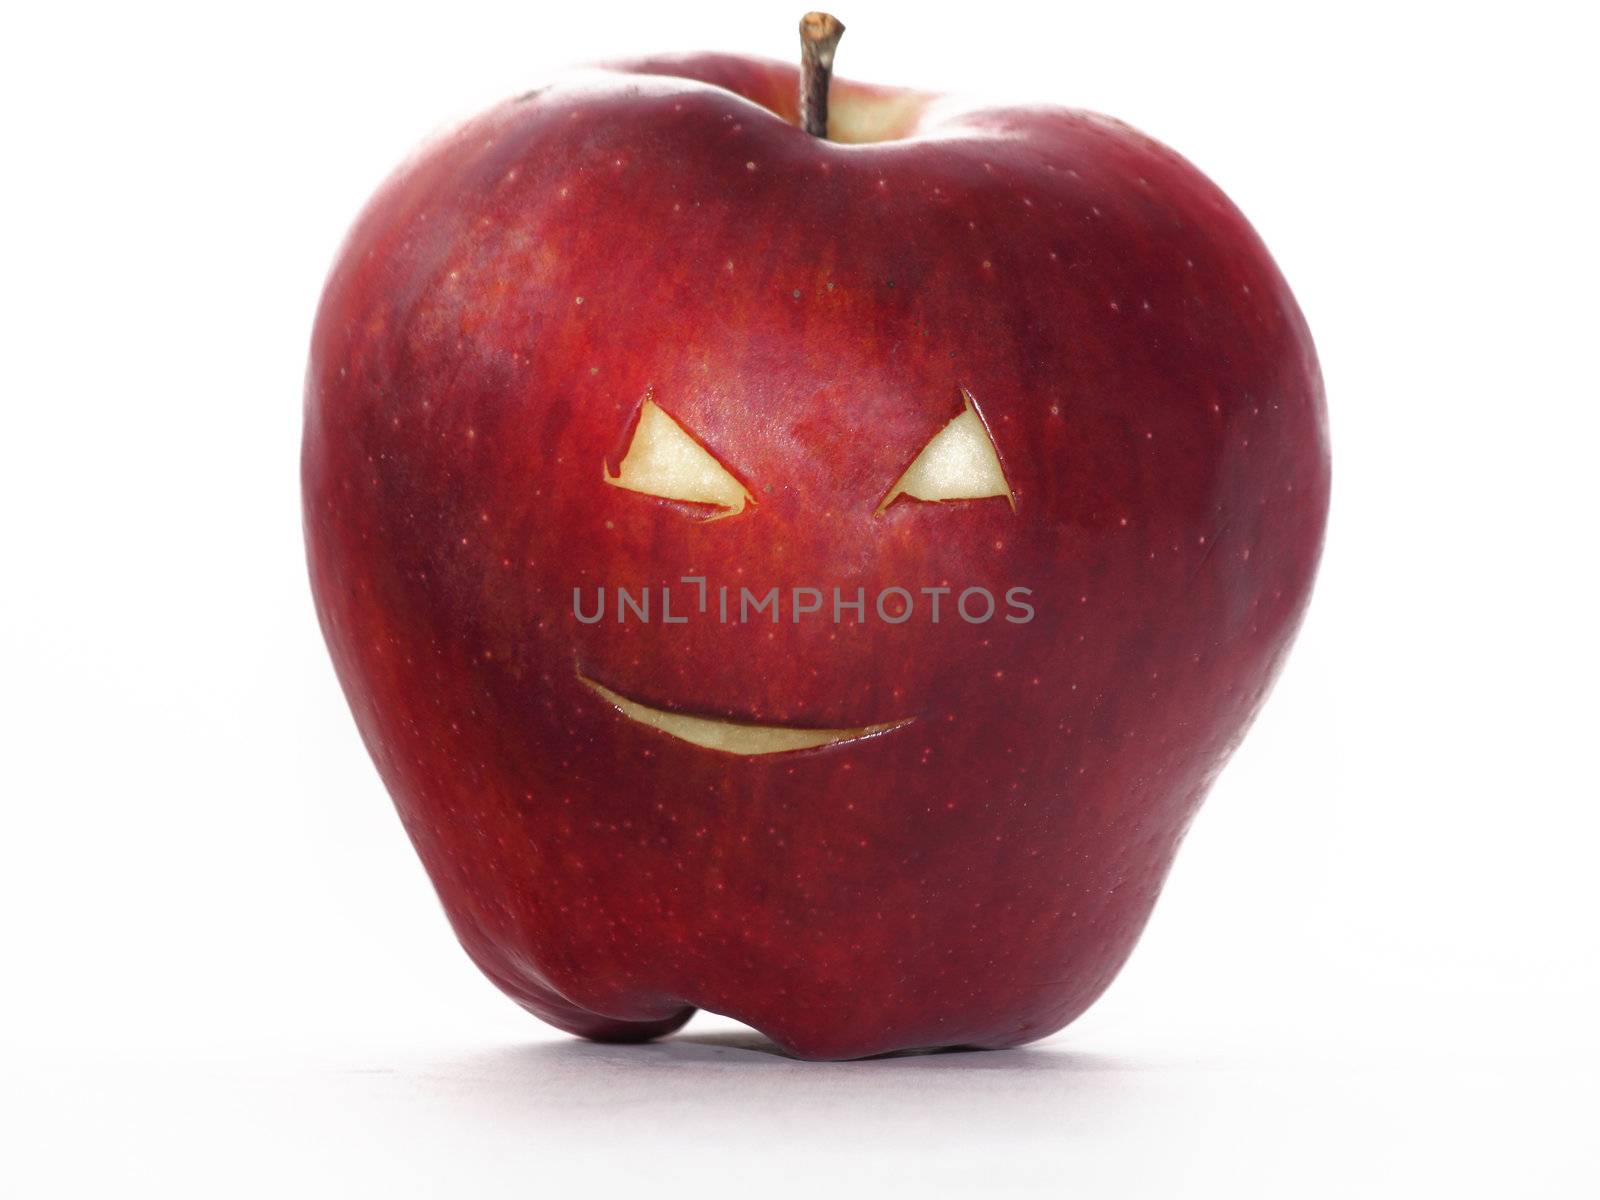 bad apple by danilobiancalana